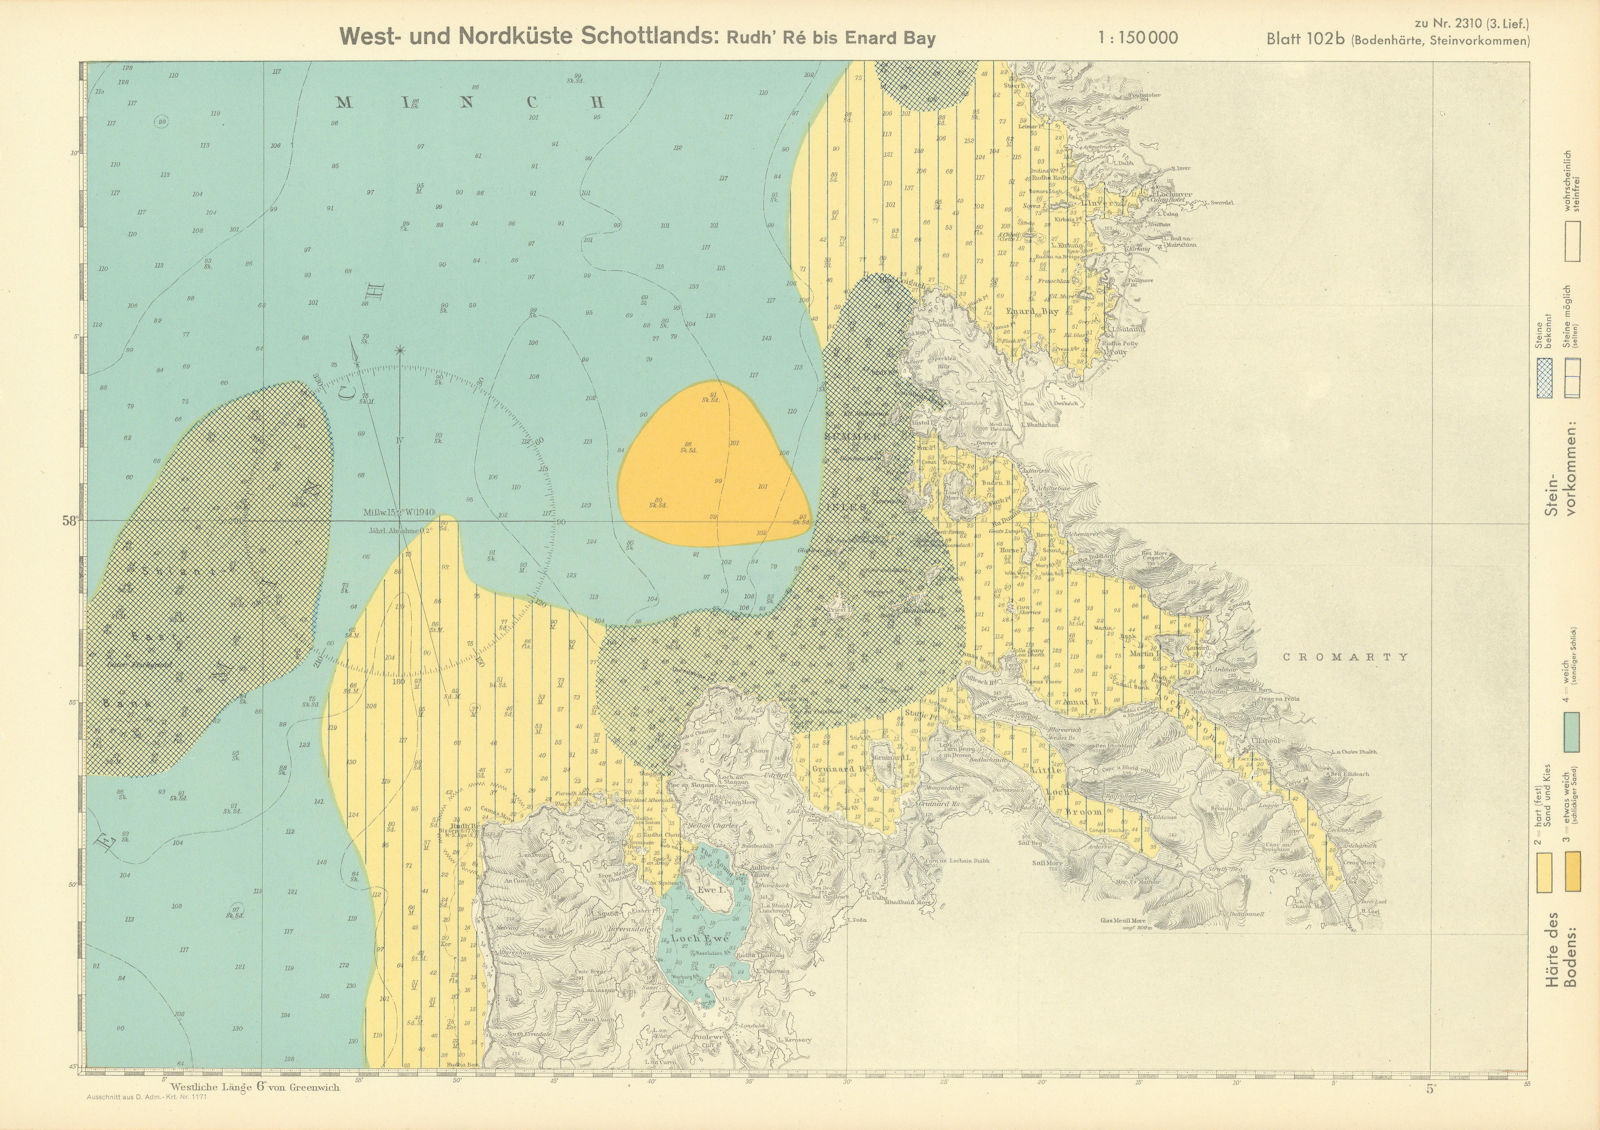 102b. Ross & Cromarty coast Loch Broom Scotland KRIEGSMARINE Nazi map 1940